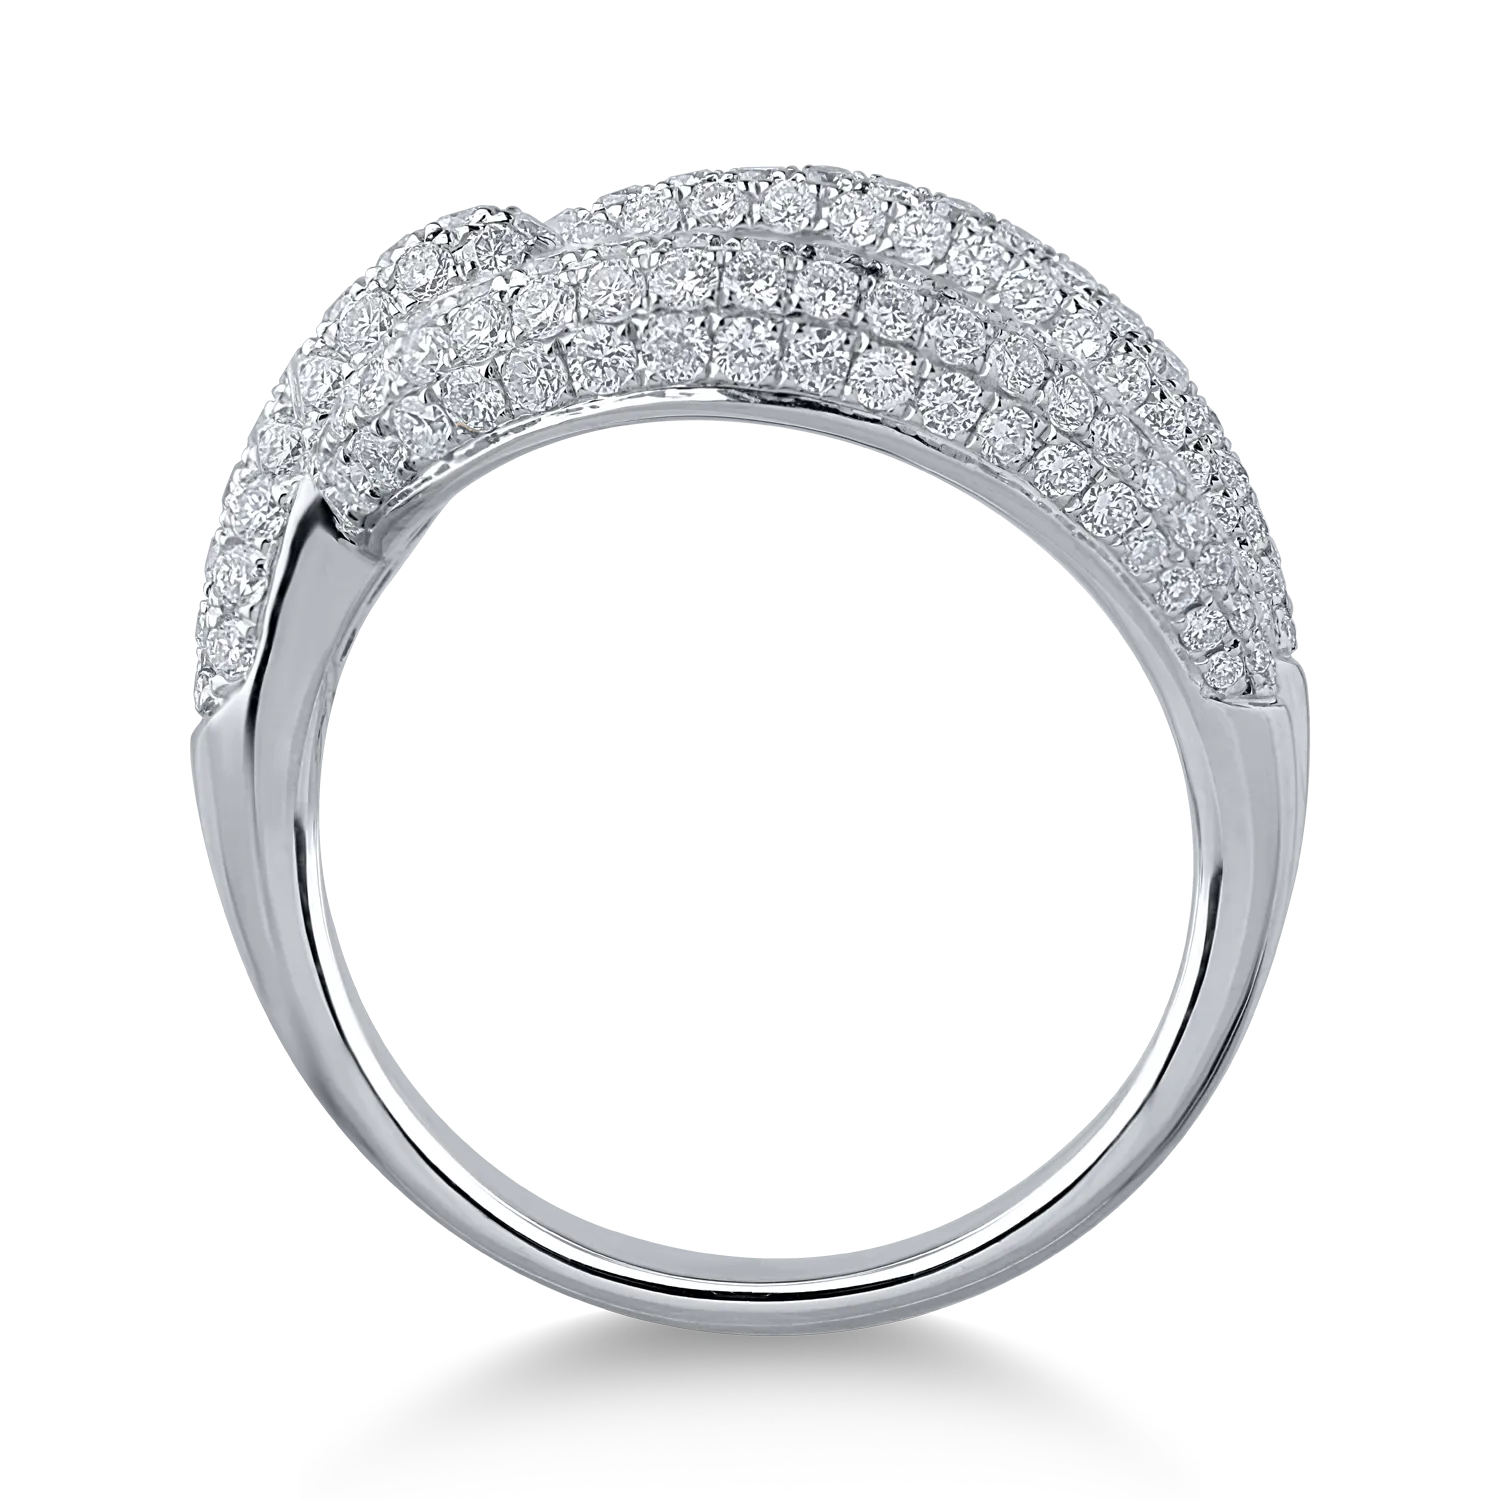 White gold geometric ring with 1.2ct diamonds